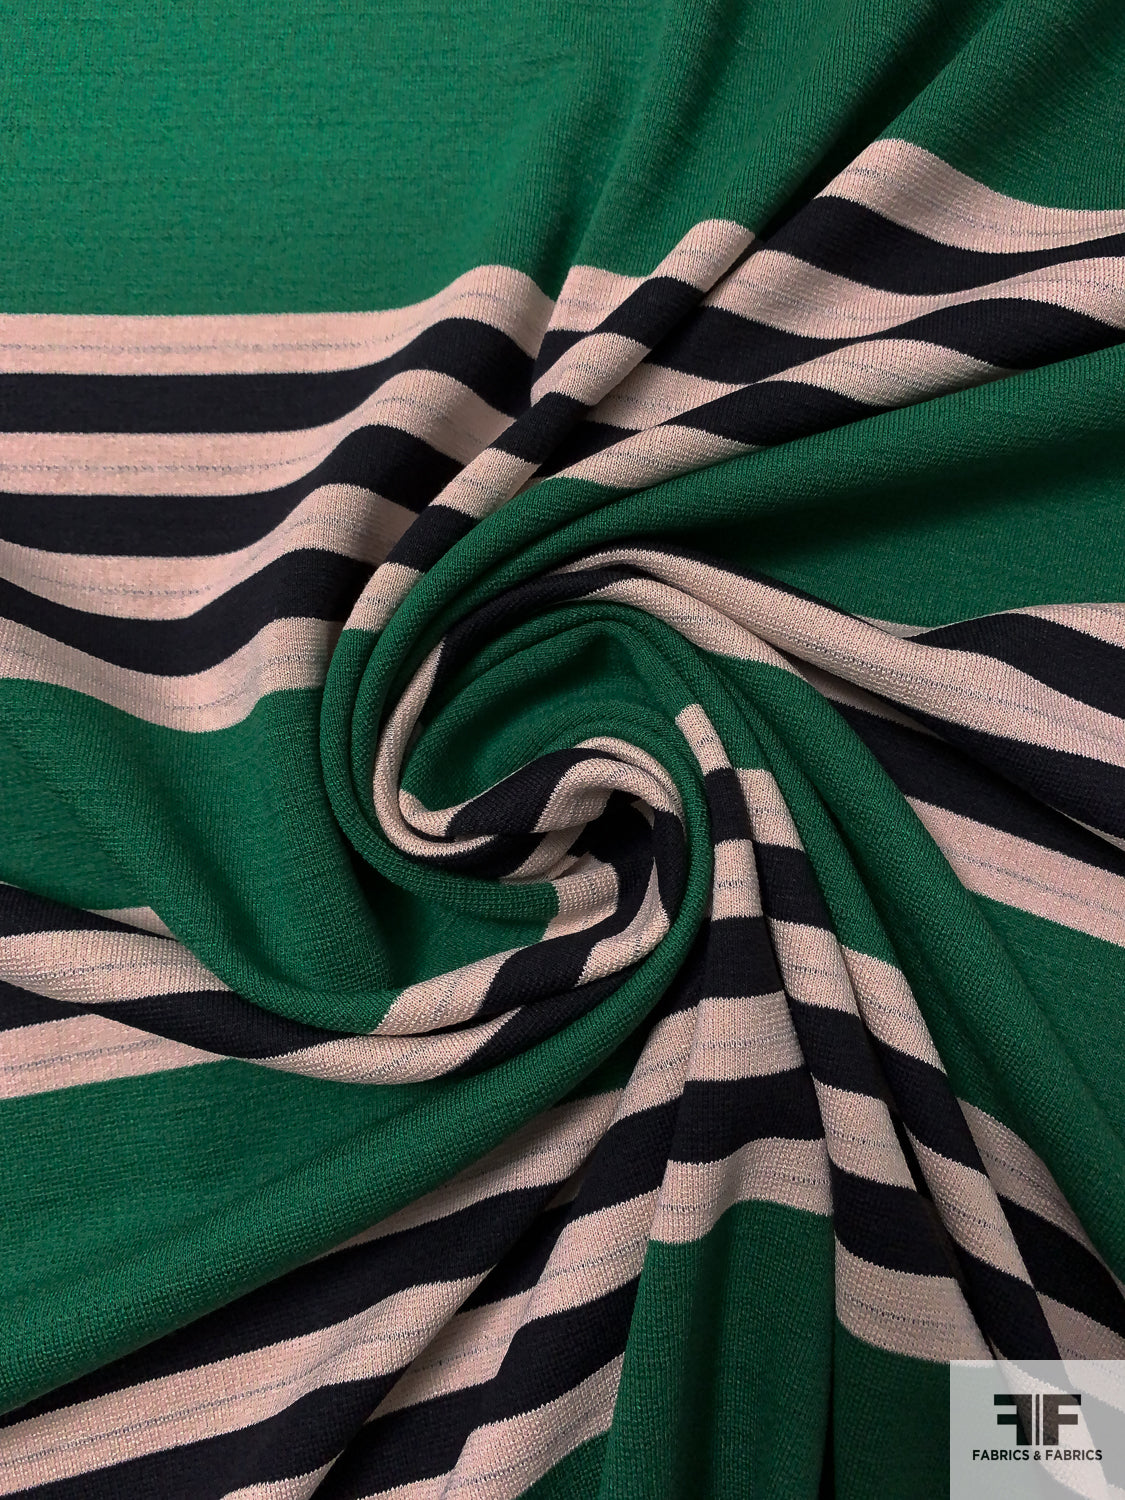 Lela Rose Italian Horizontal Striped Rayon Blend Ponte Knit - Green / Black  / Light Nude - Fabric by the Yard